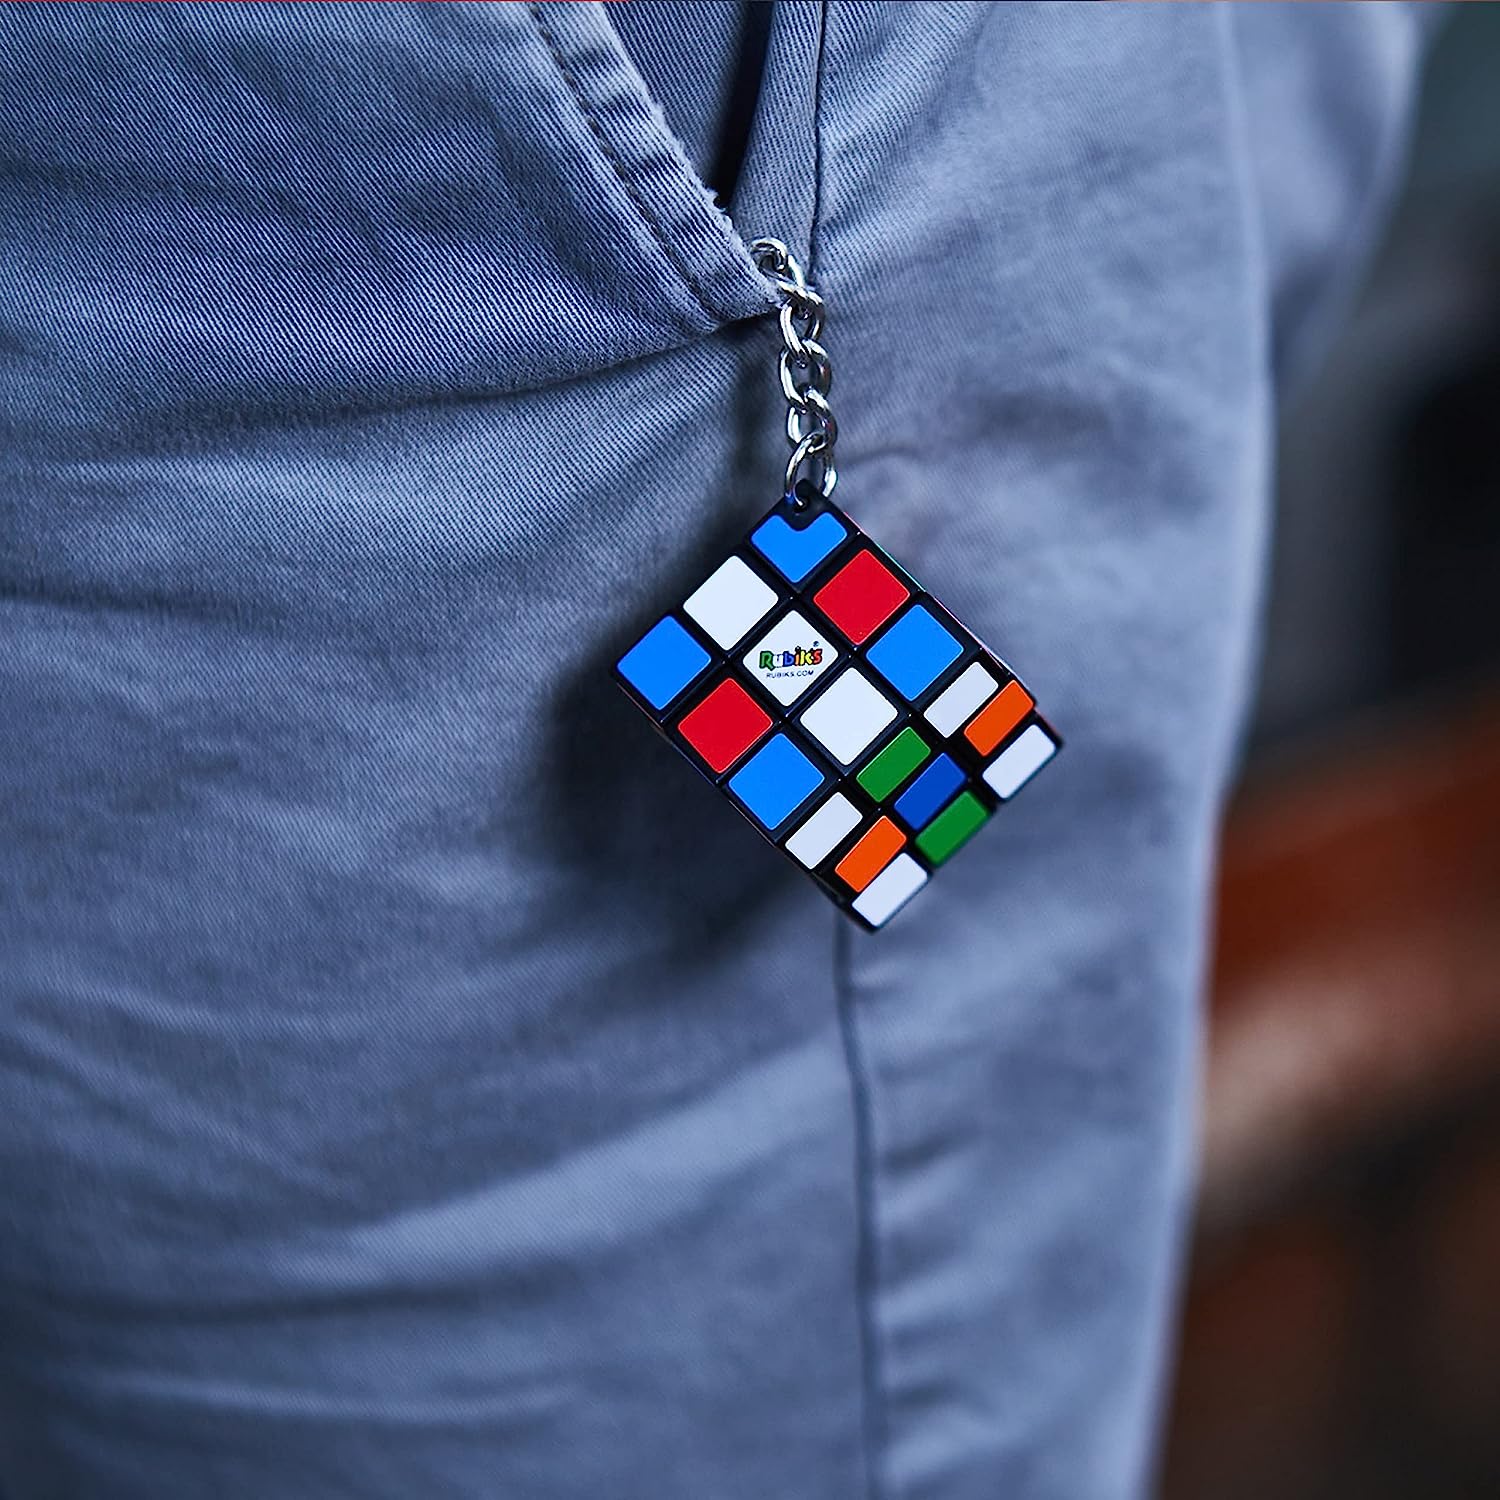 Rubik'S Cube Keychain Cdu